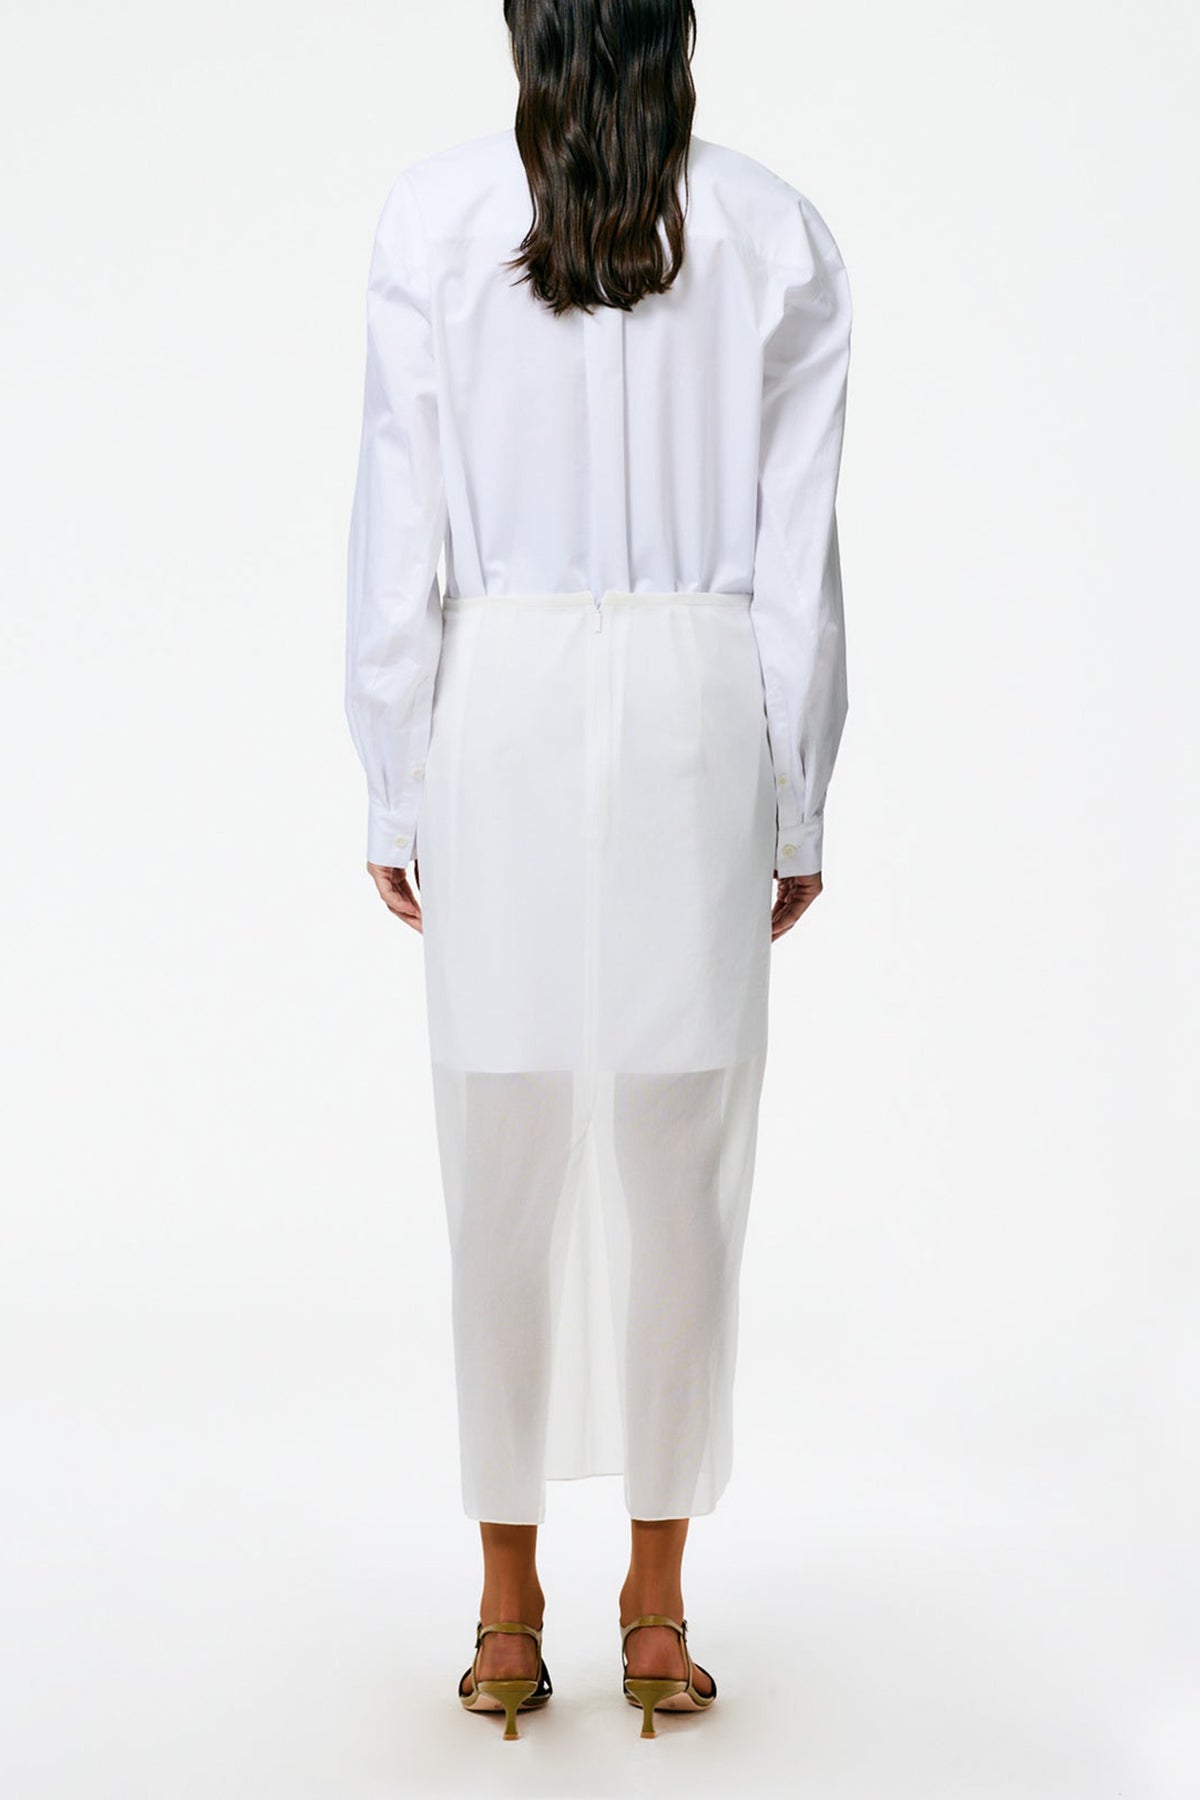 Eco Poplin Twisted Sleeve Dress in White - shop-olivia.com